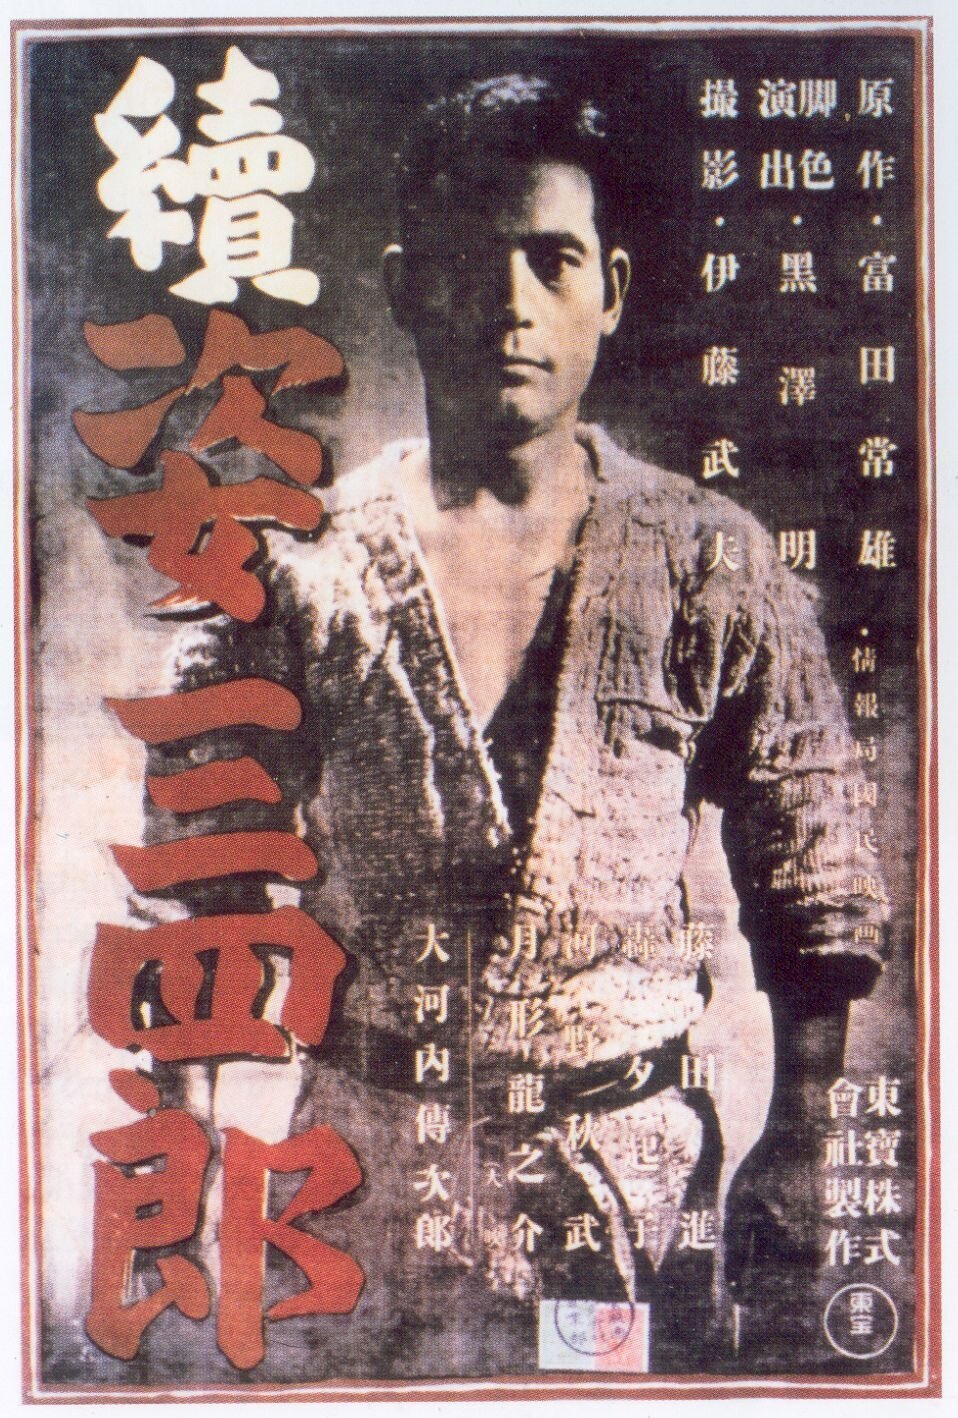 Sanshiro Sugata Part Two Poster.jpg